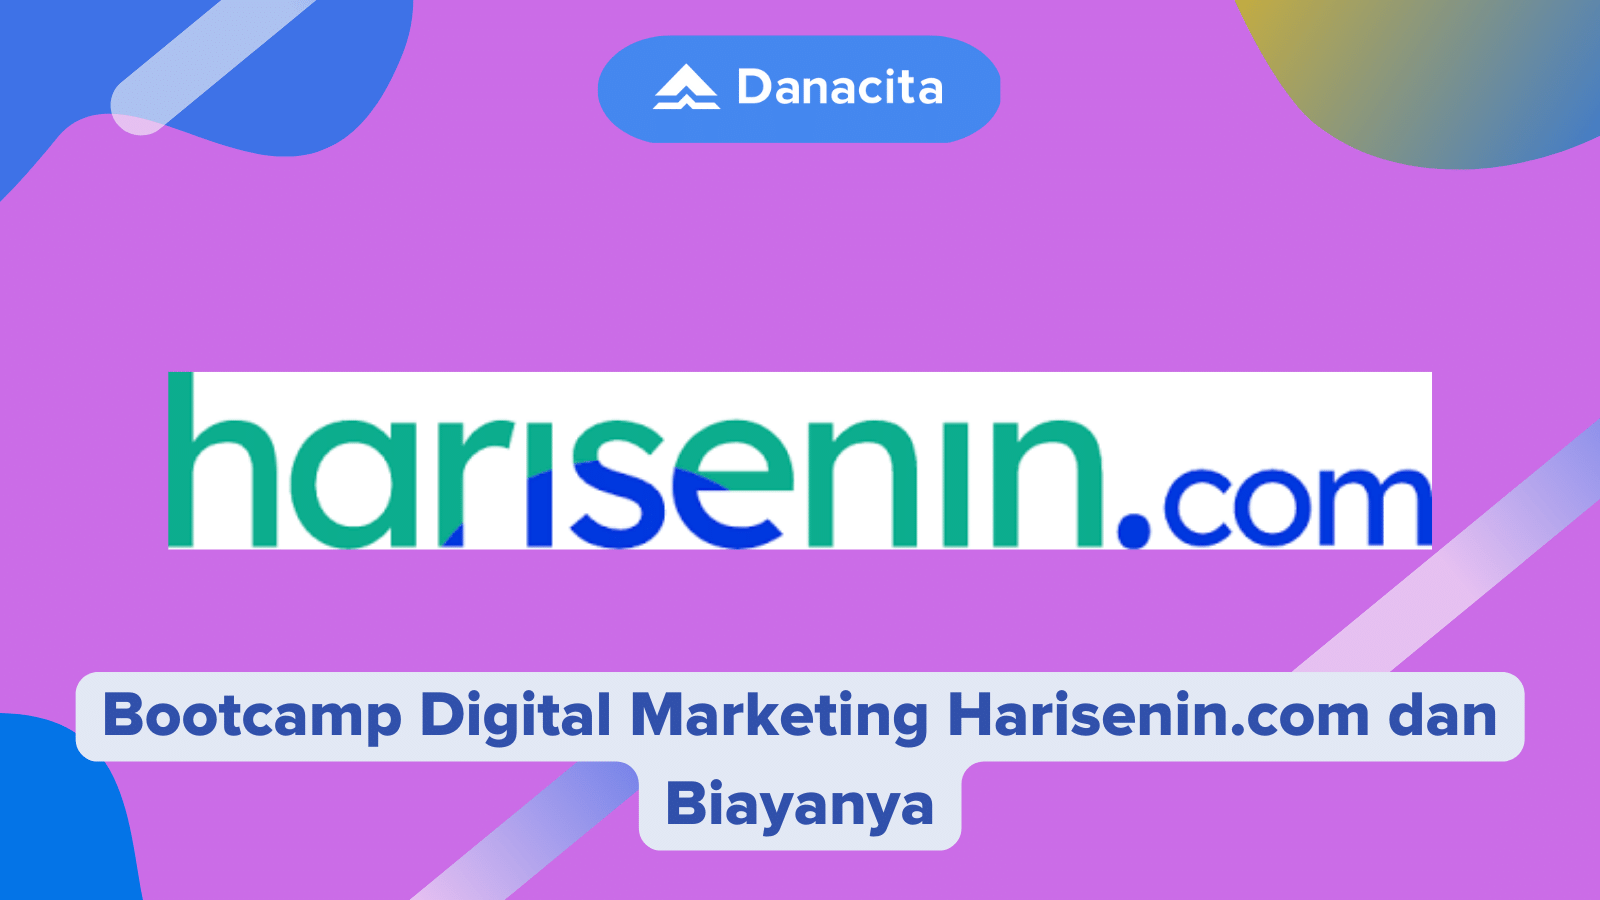 Bootcamp-Digital-Marketing-Harisenin-com